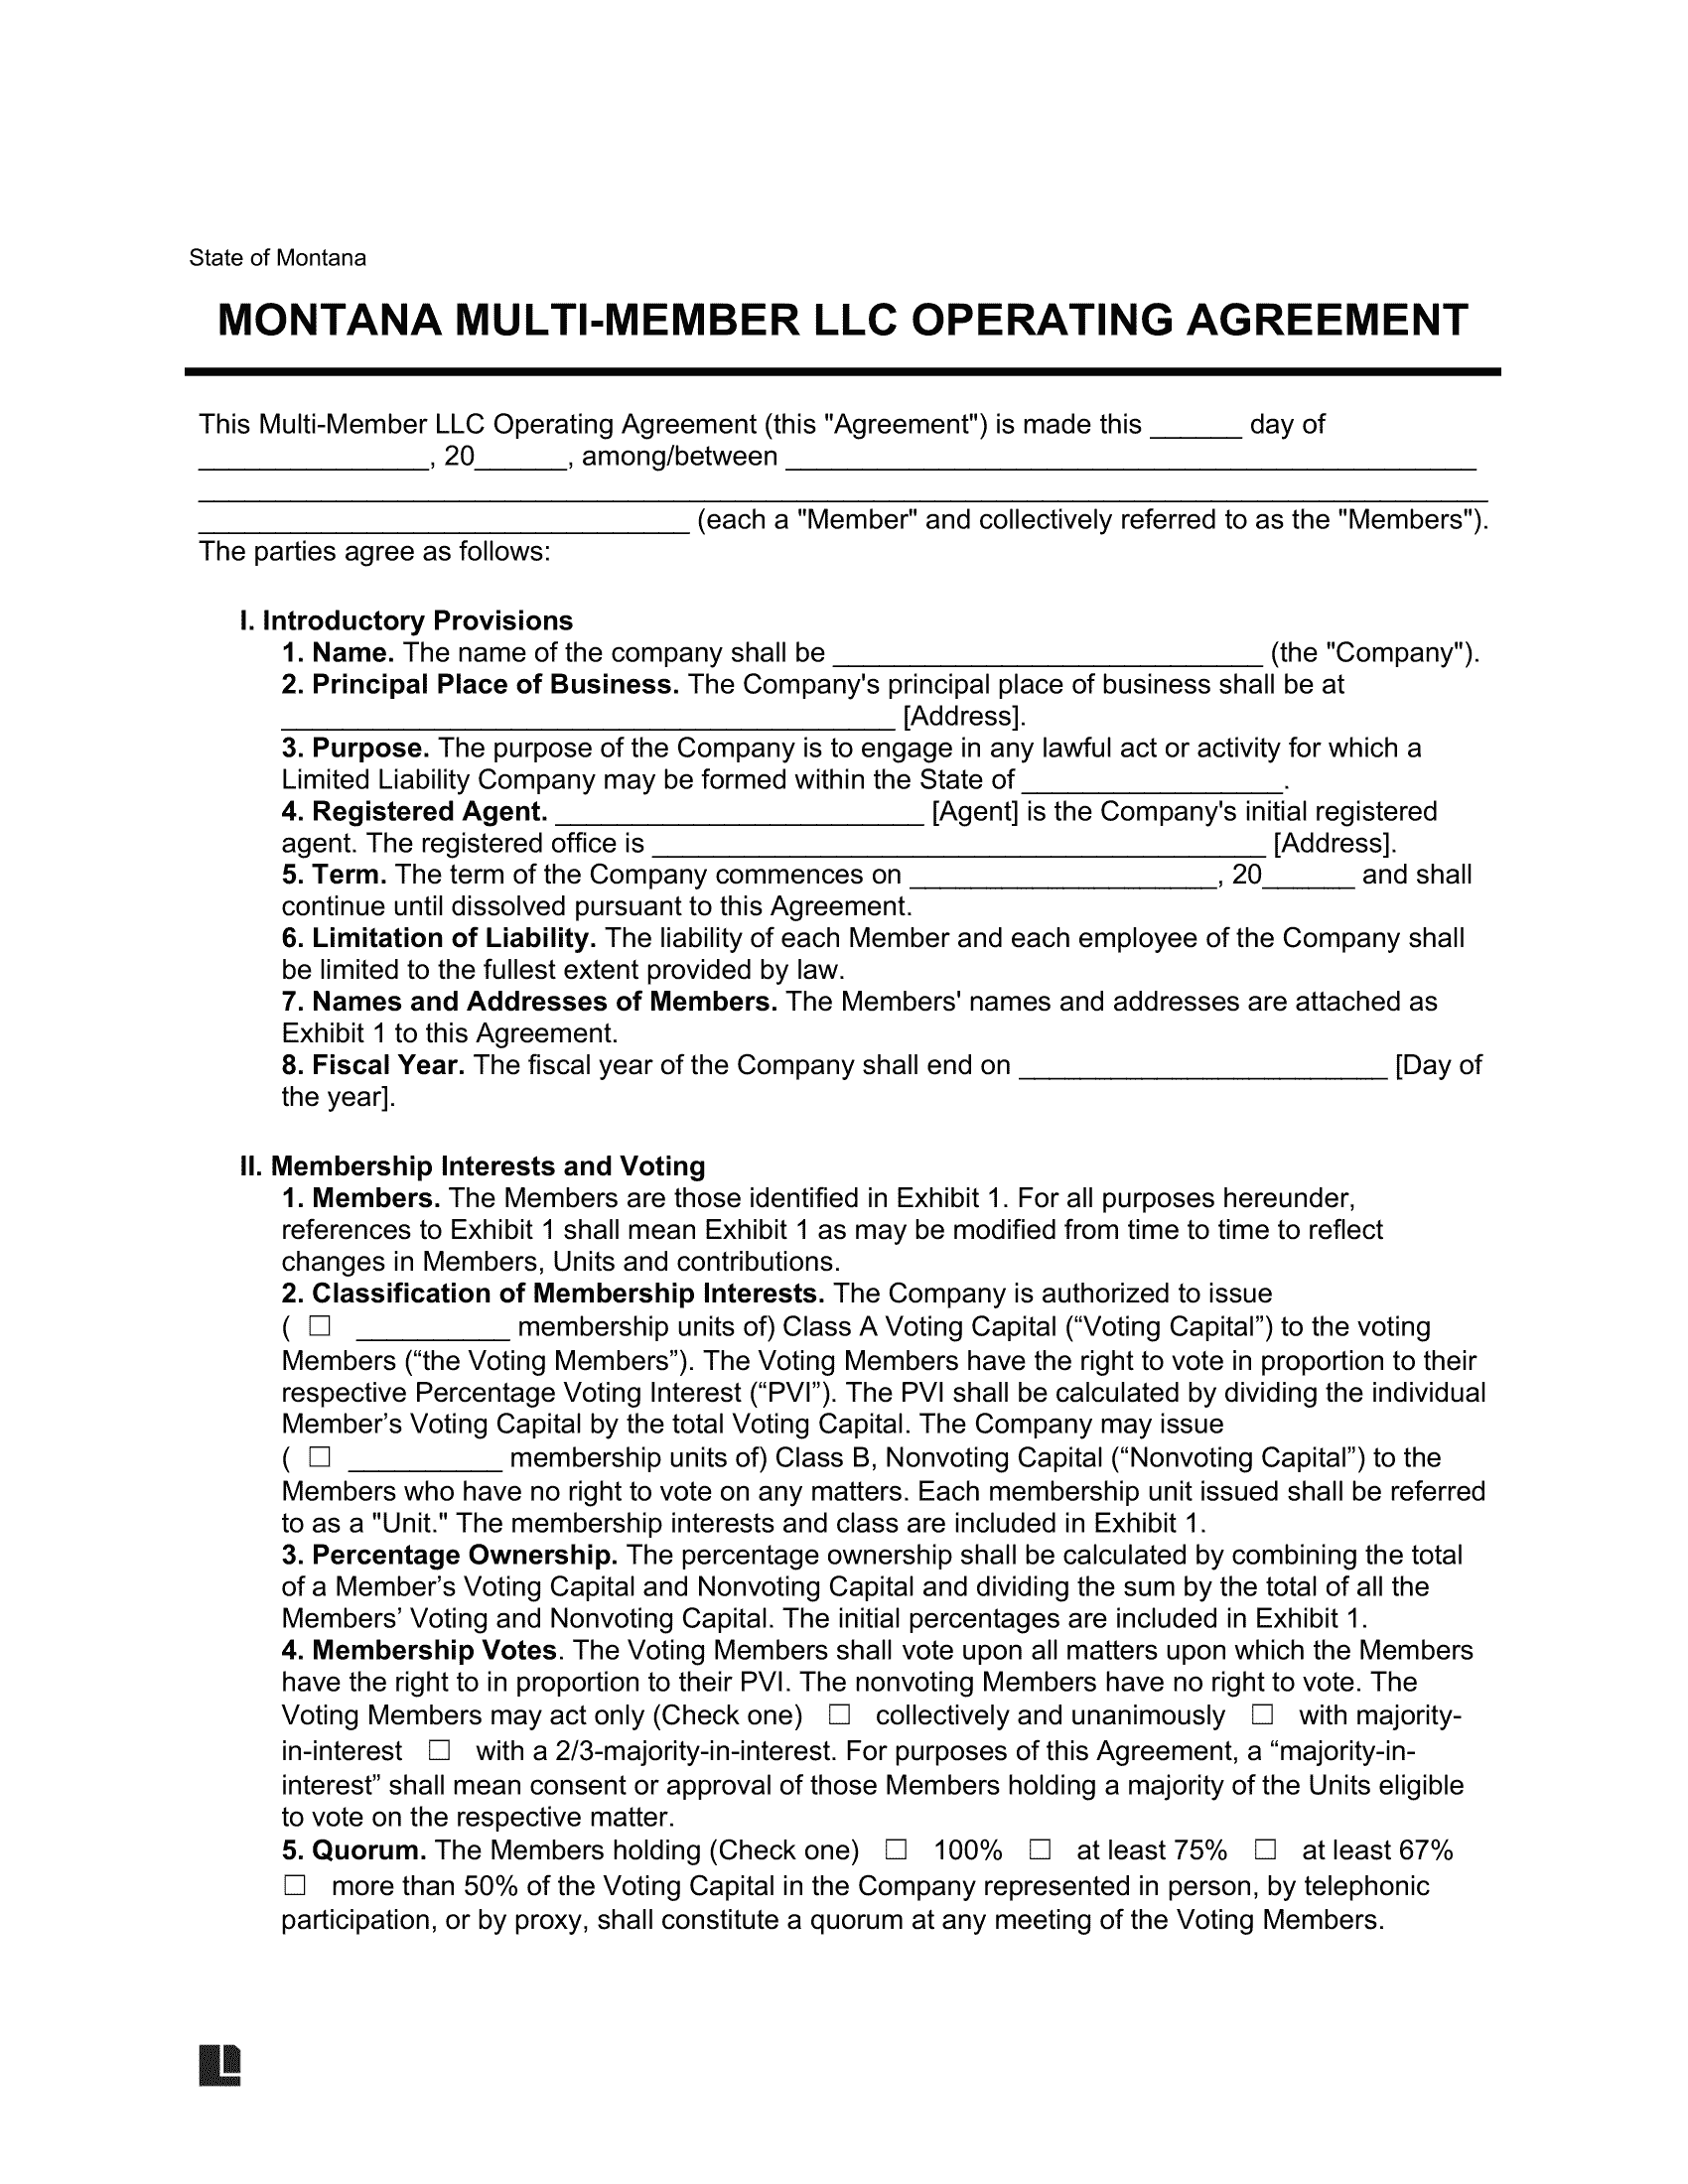 Montana Multi-Member LLC Operating Agreement Template